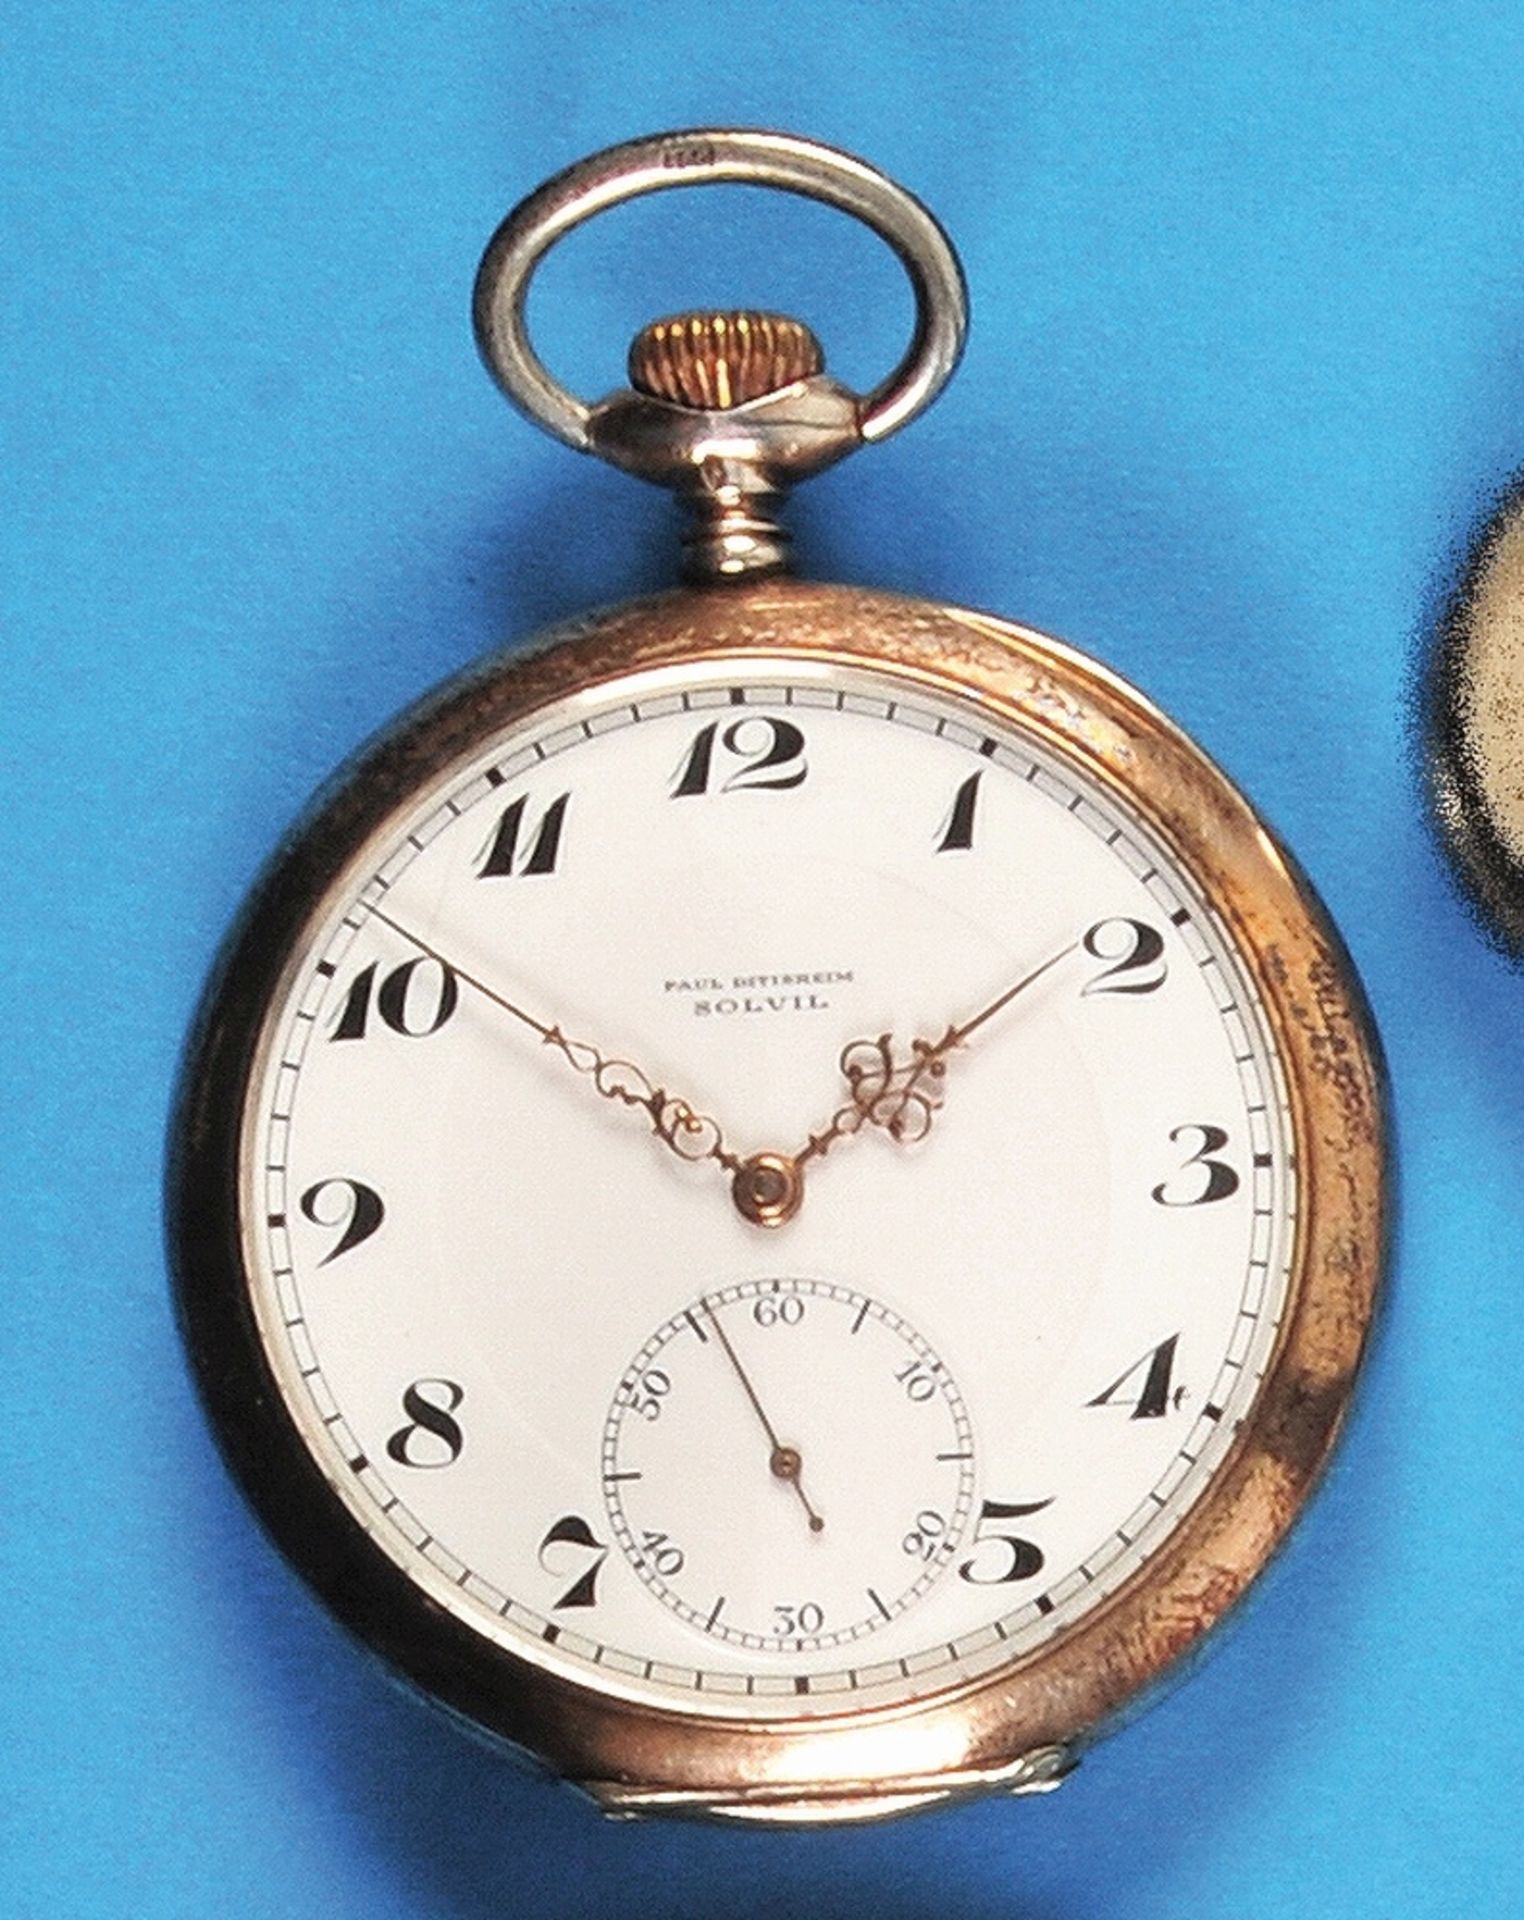 Paul Ditisheim, Solvil, silver pocket watch with affix-compensations balance - Bild 2 aus 2